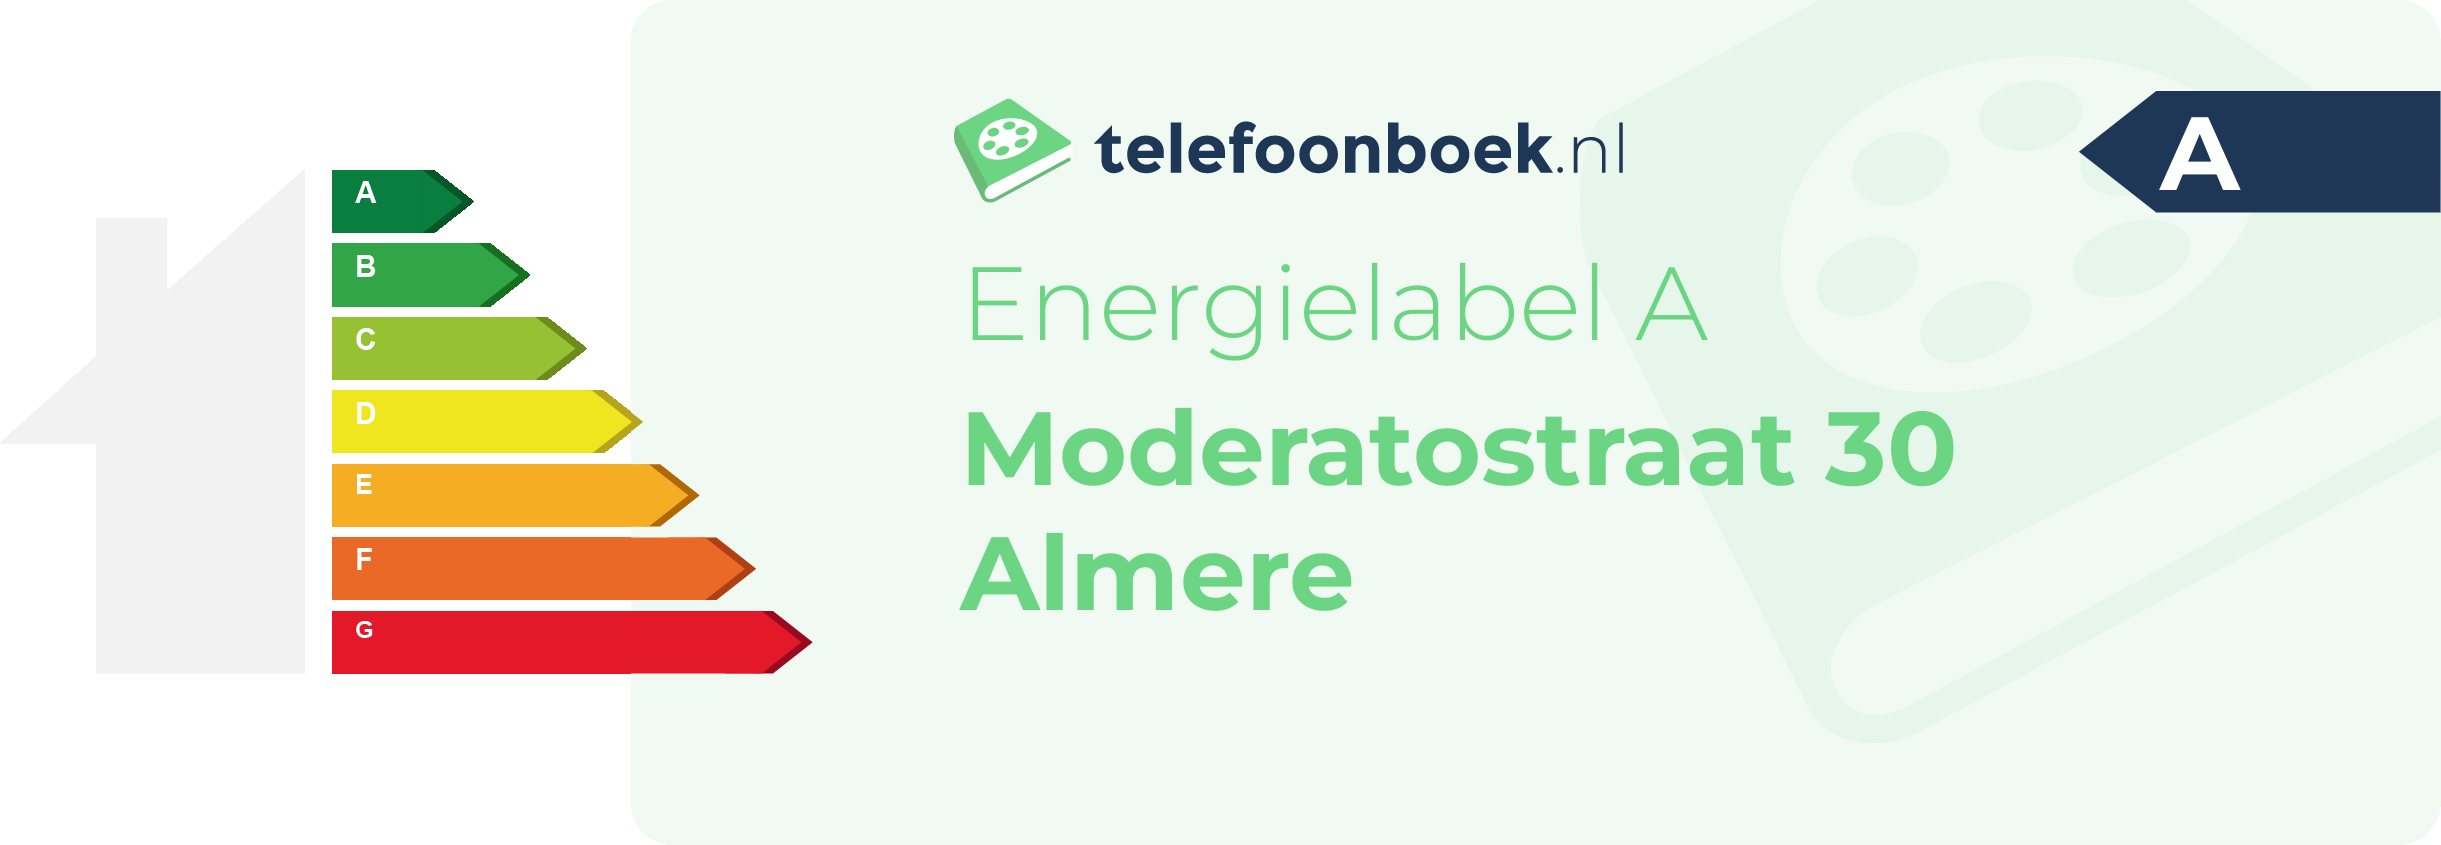 Energielabel Moderatostraat 30 Almere